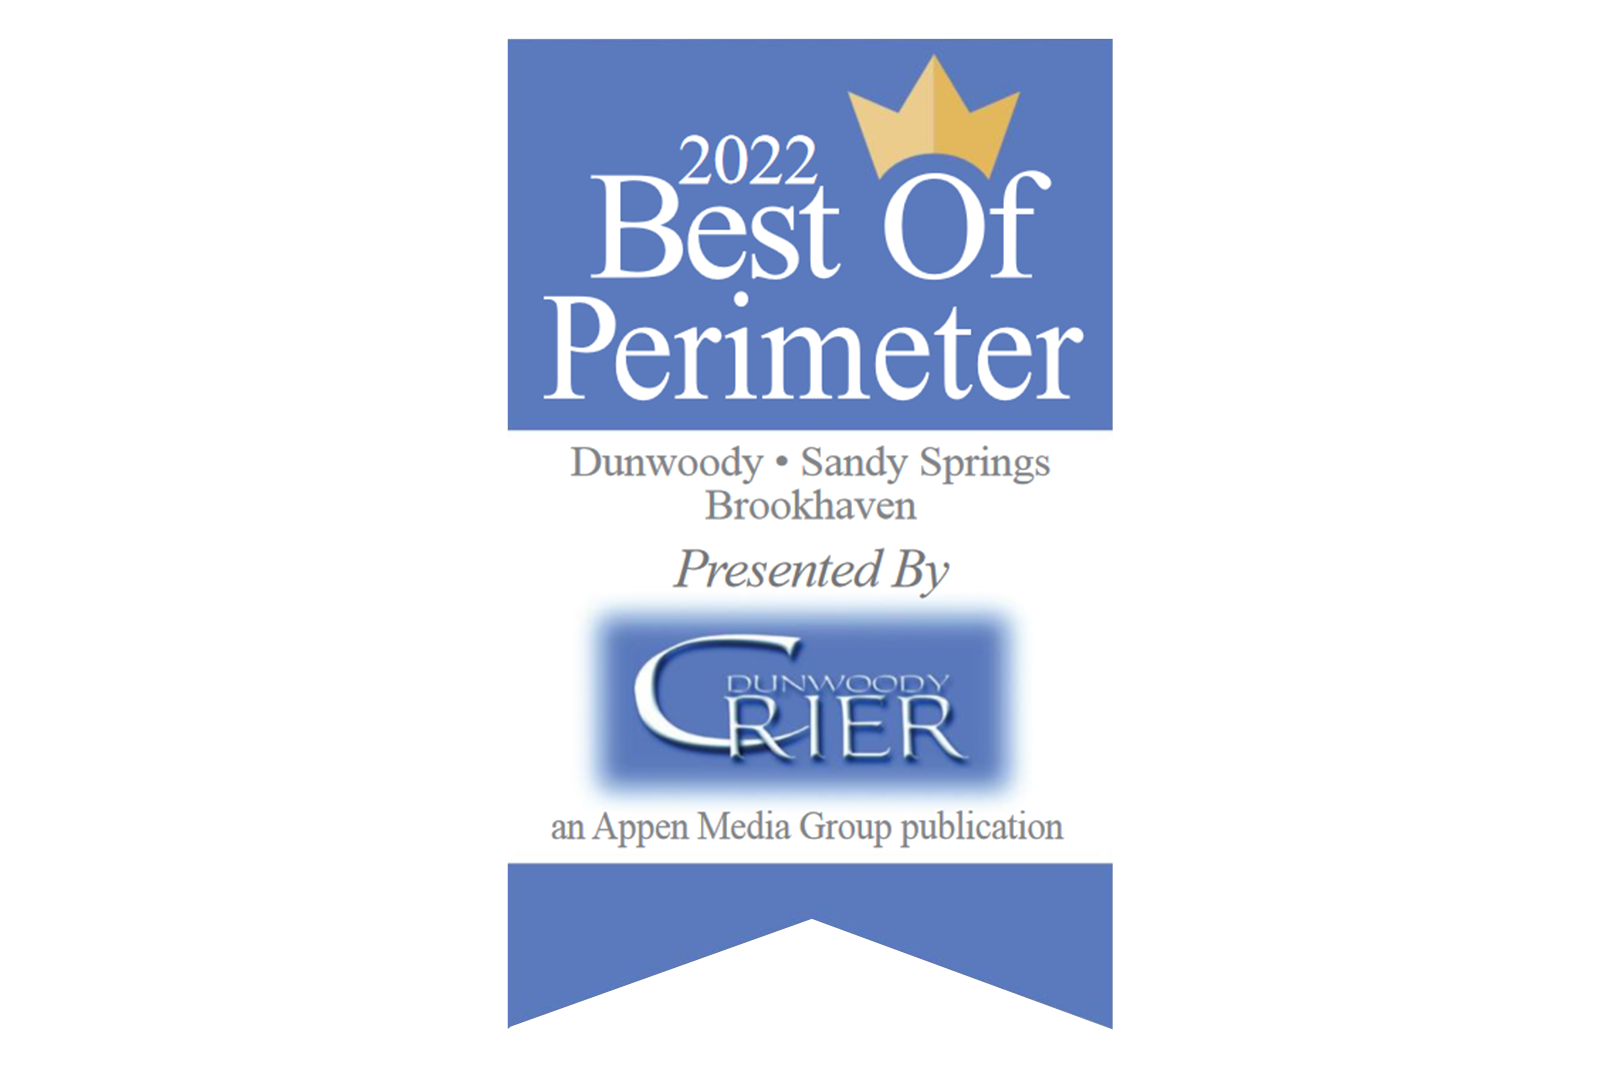 Best of Perimeter award